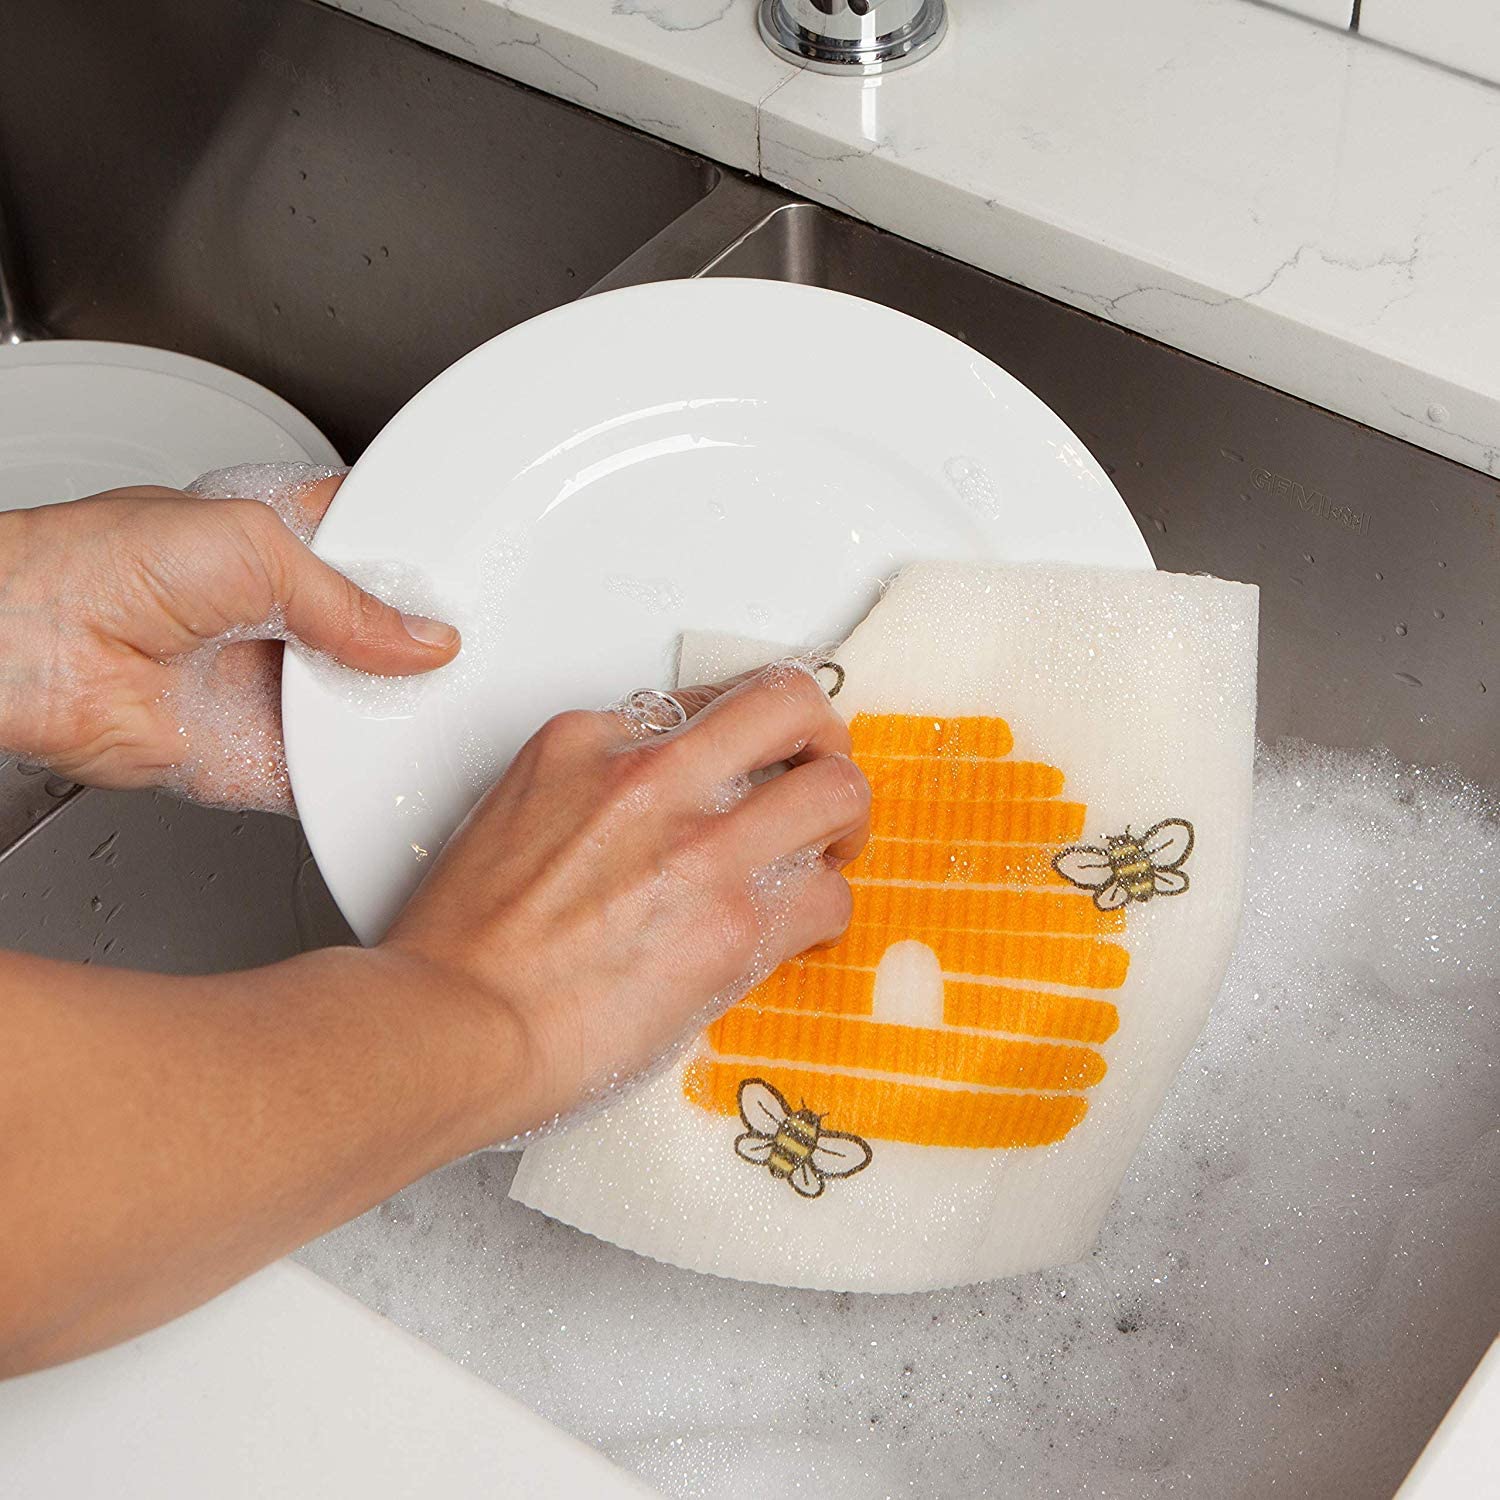 hands washing dishes with swedish dish cloth.